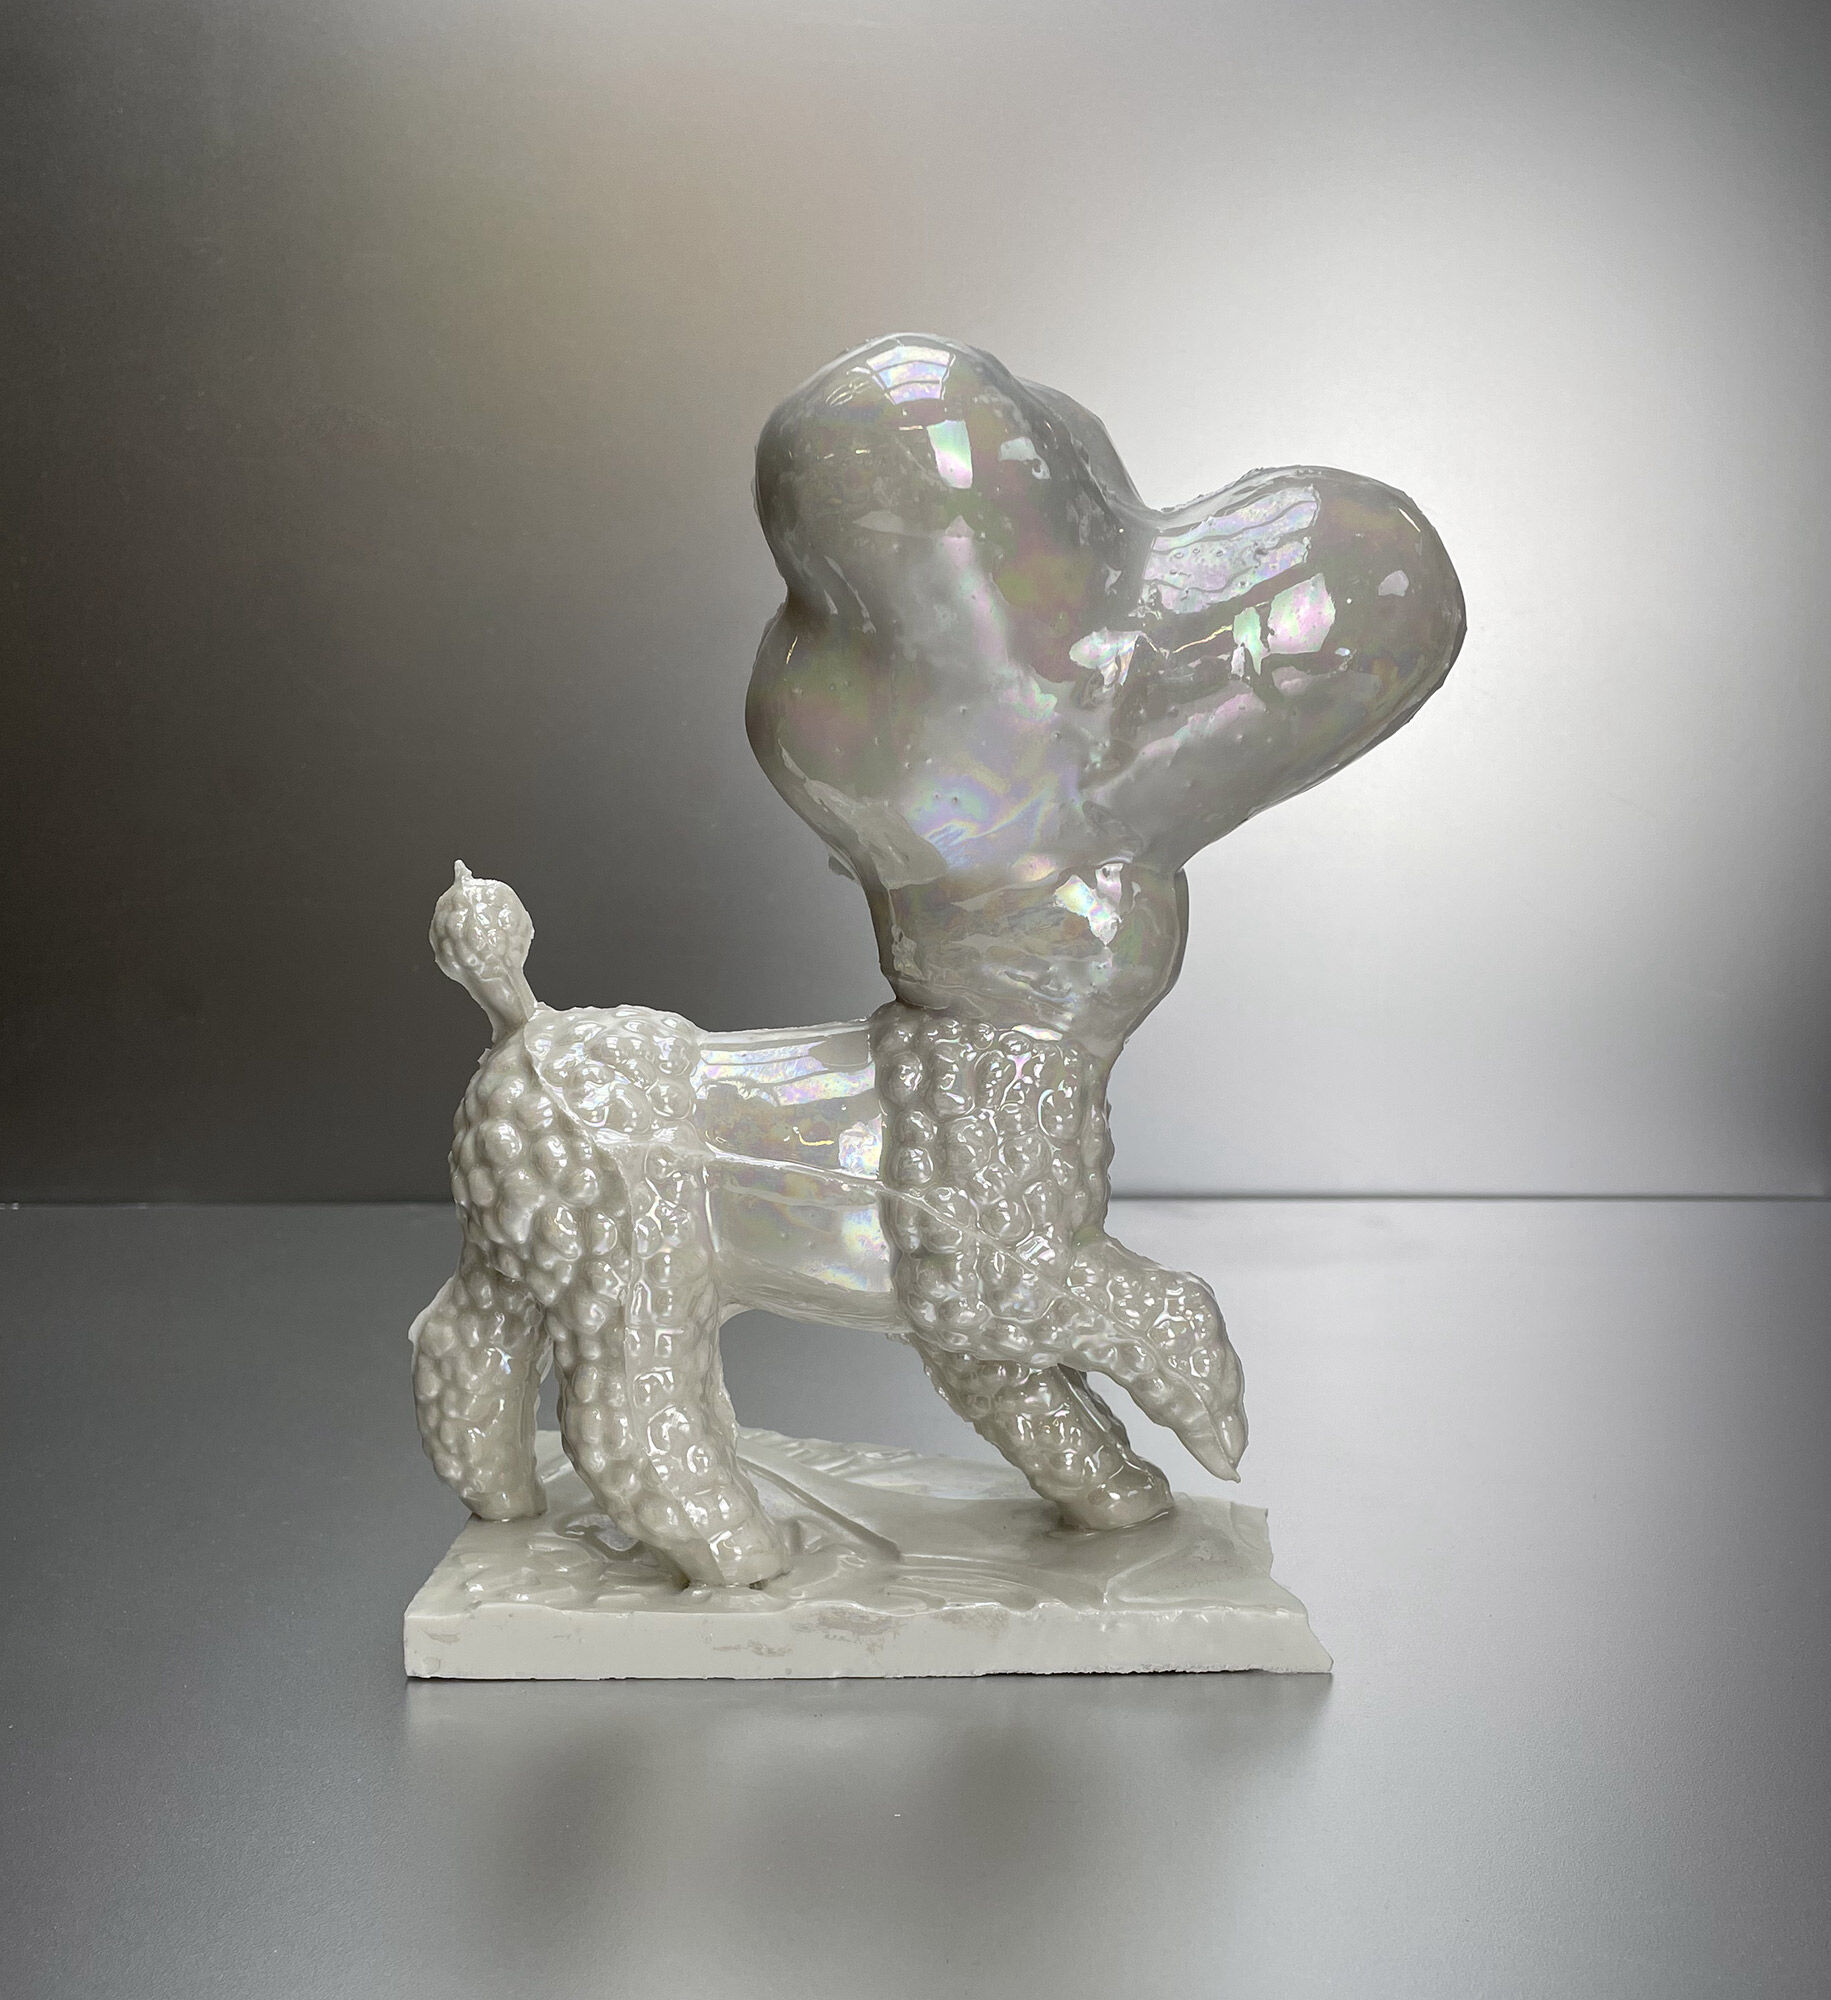 Skulptur "Imperial" (2020) (Unikat) von Hannes Uhlenhaut